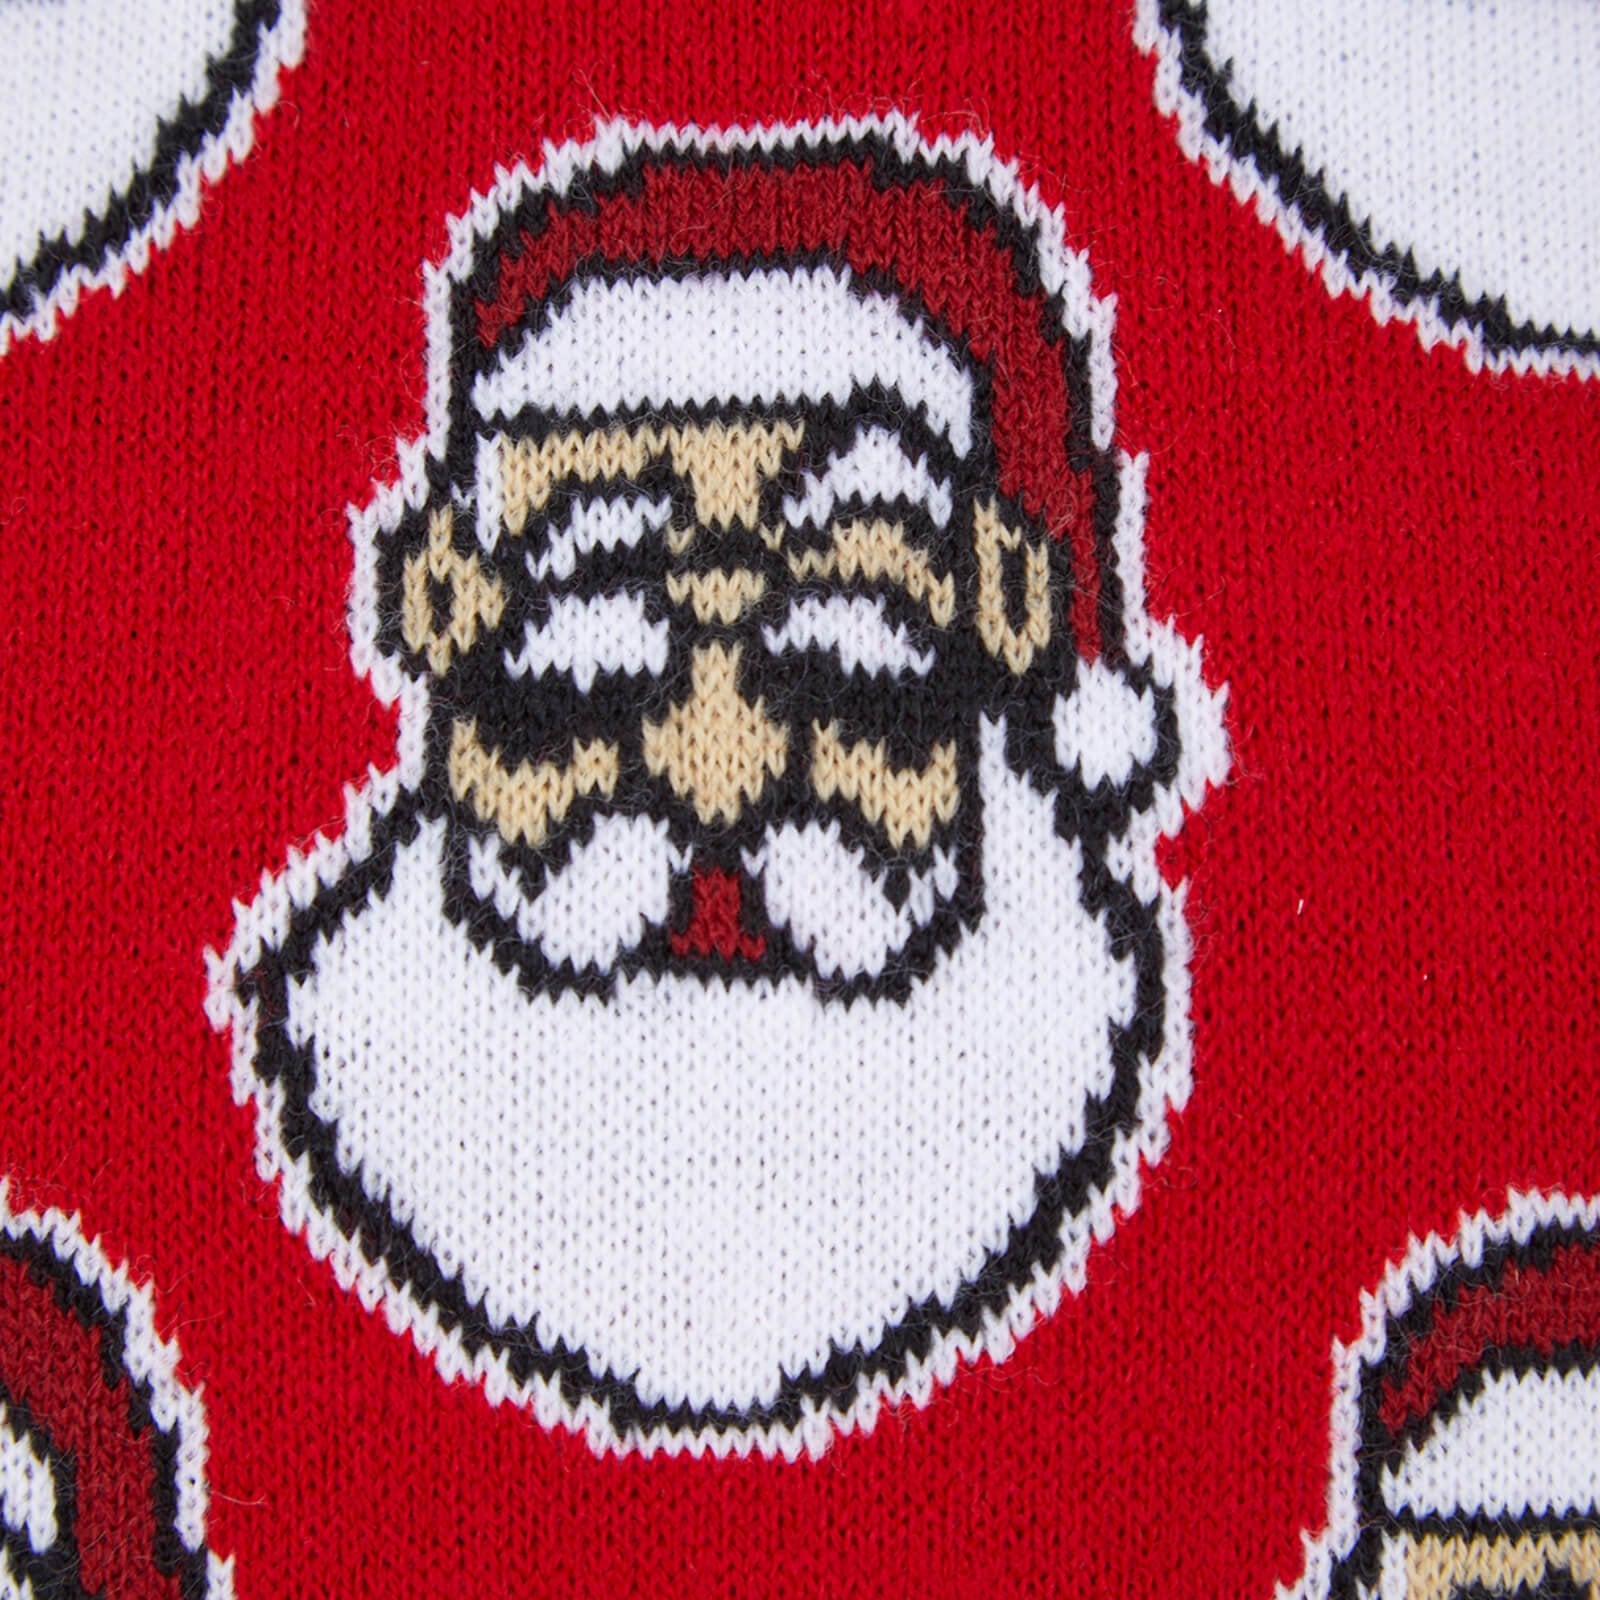 Mr Crimbo Kids Novelty Small Santa Heads Christmas Jumper - MrCrimbo.co.uk -SRG2A189861_A - Red -11-13 years